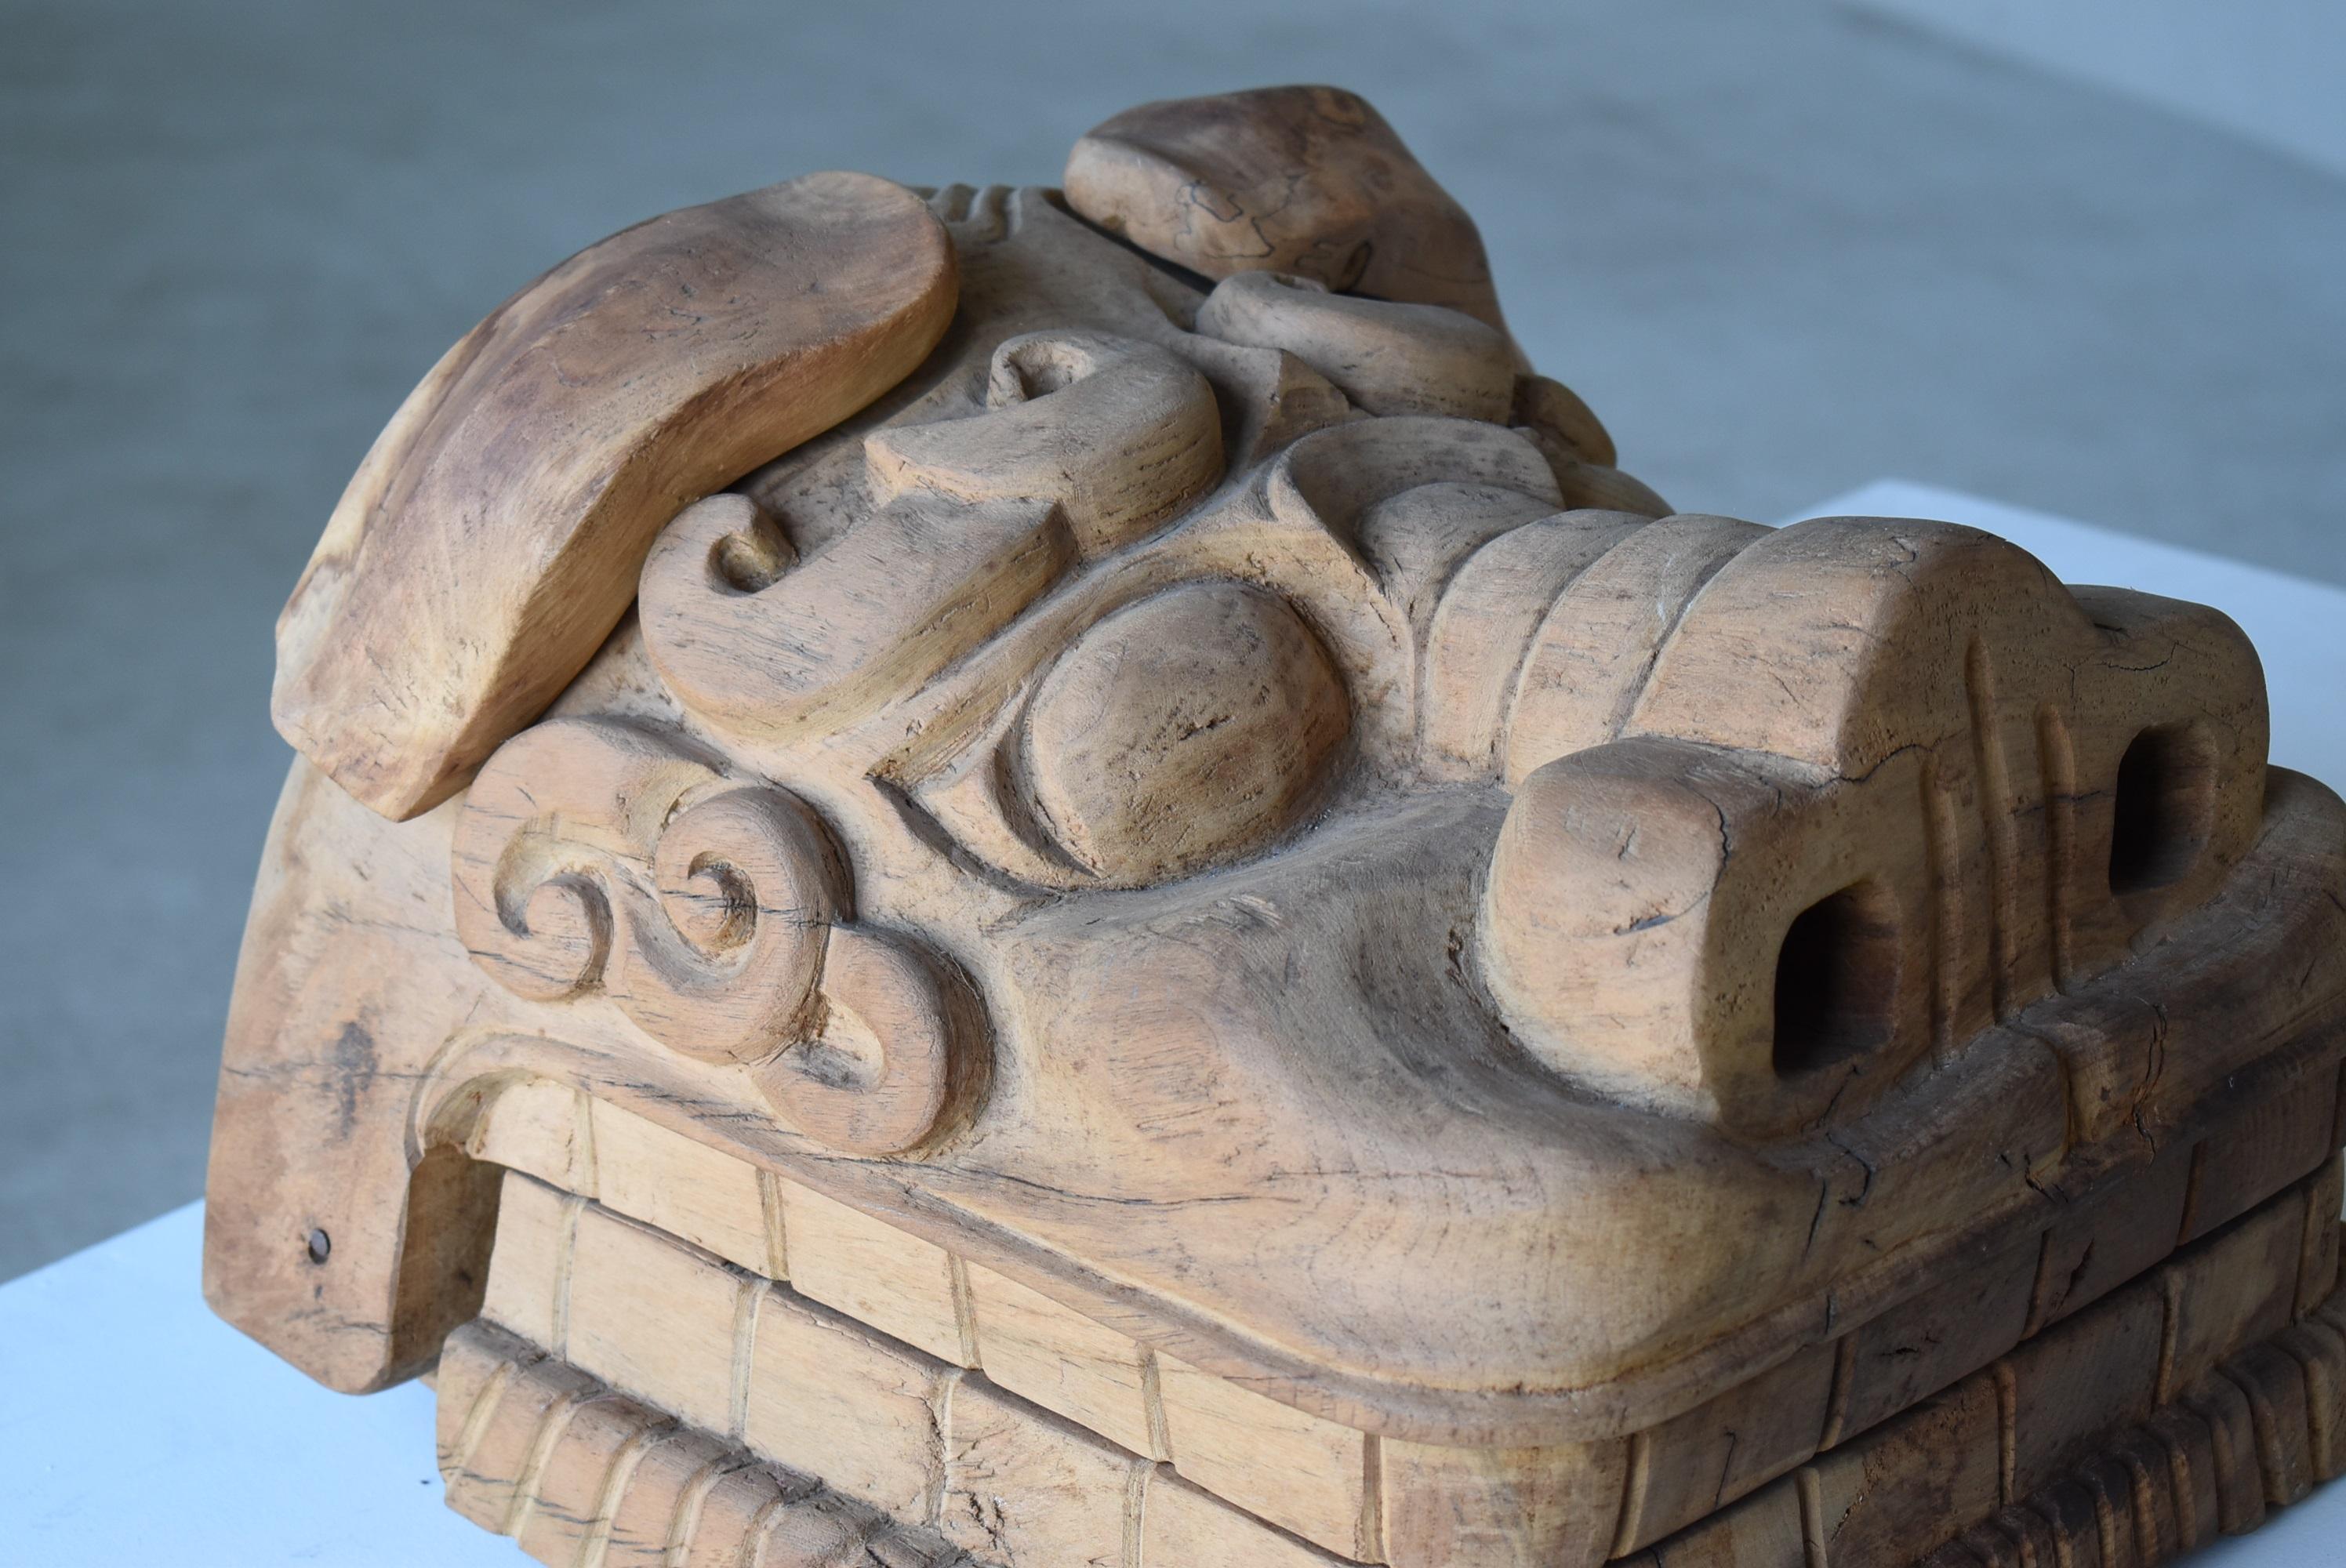 20th Century Japanese Old Wood Carving Lion Head/Antique Folk Art Figurine Object Wabisabi